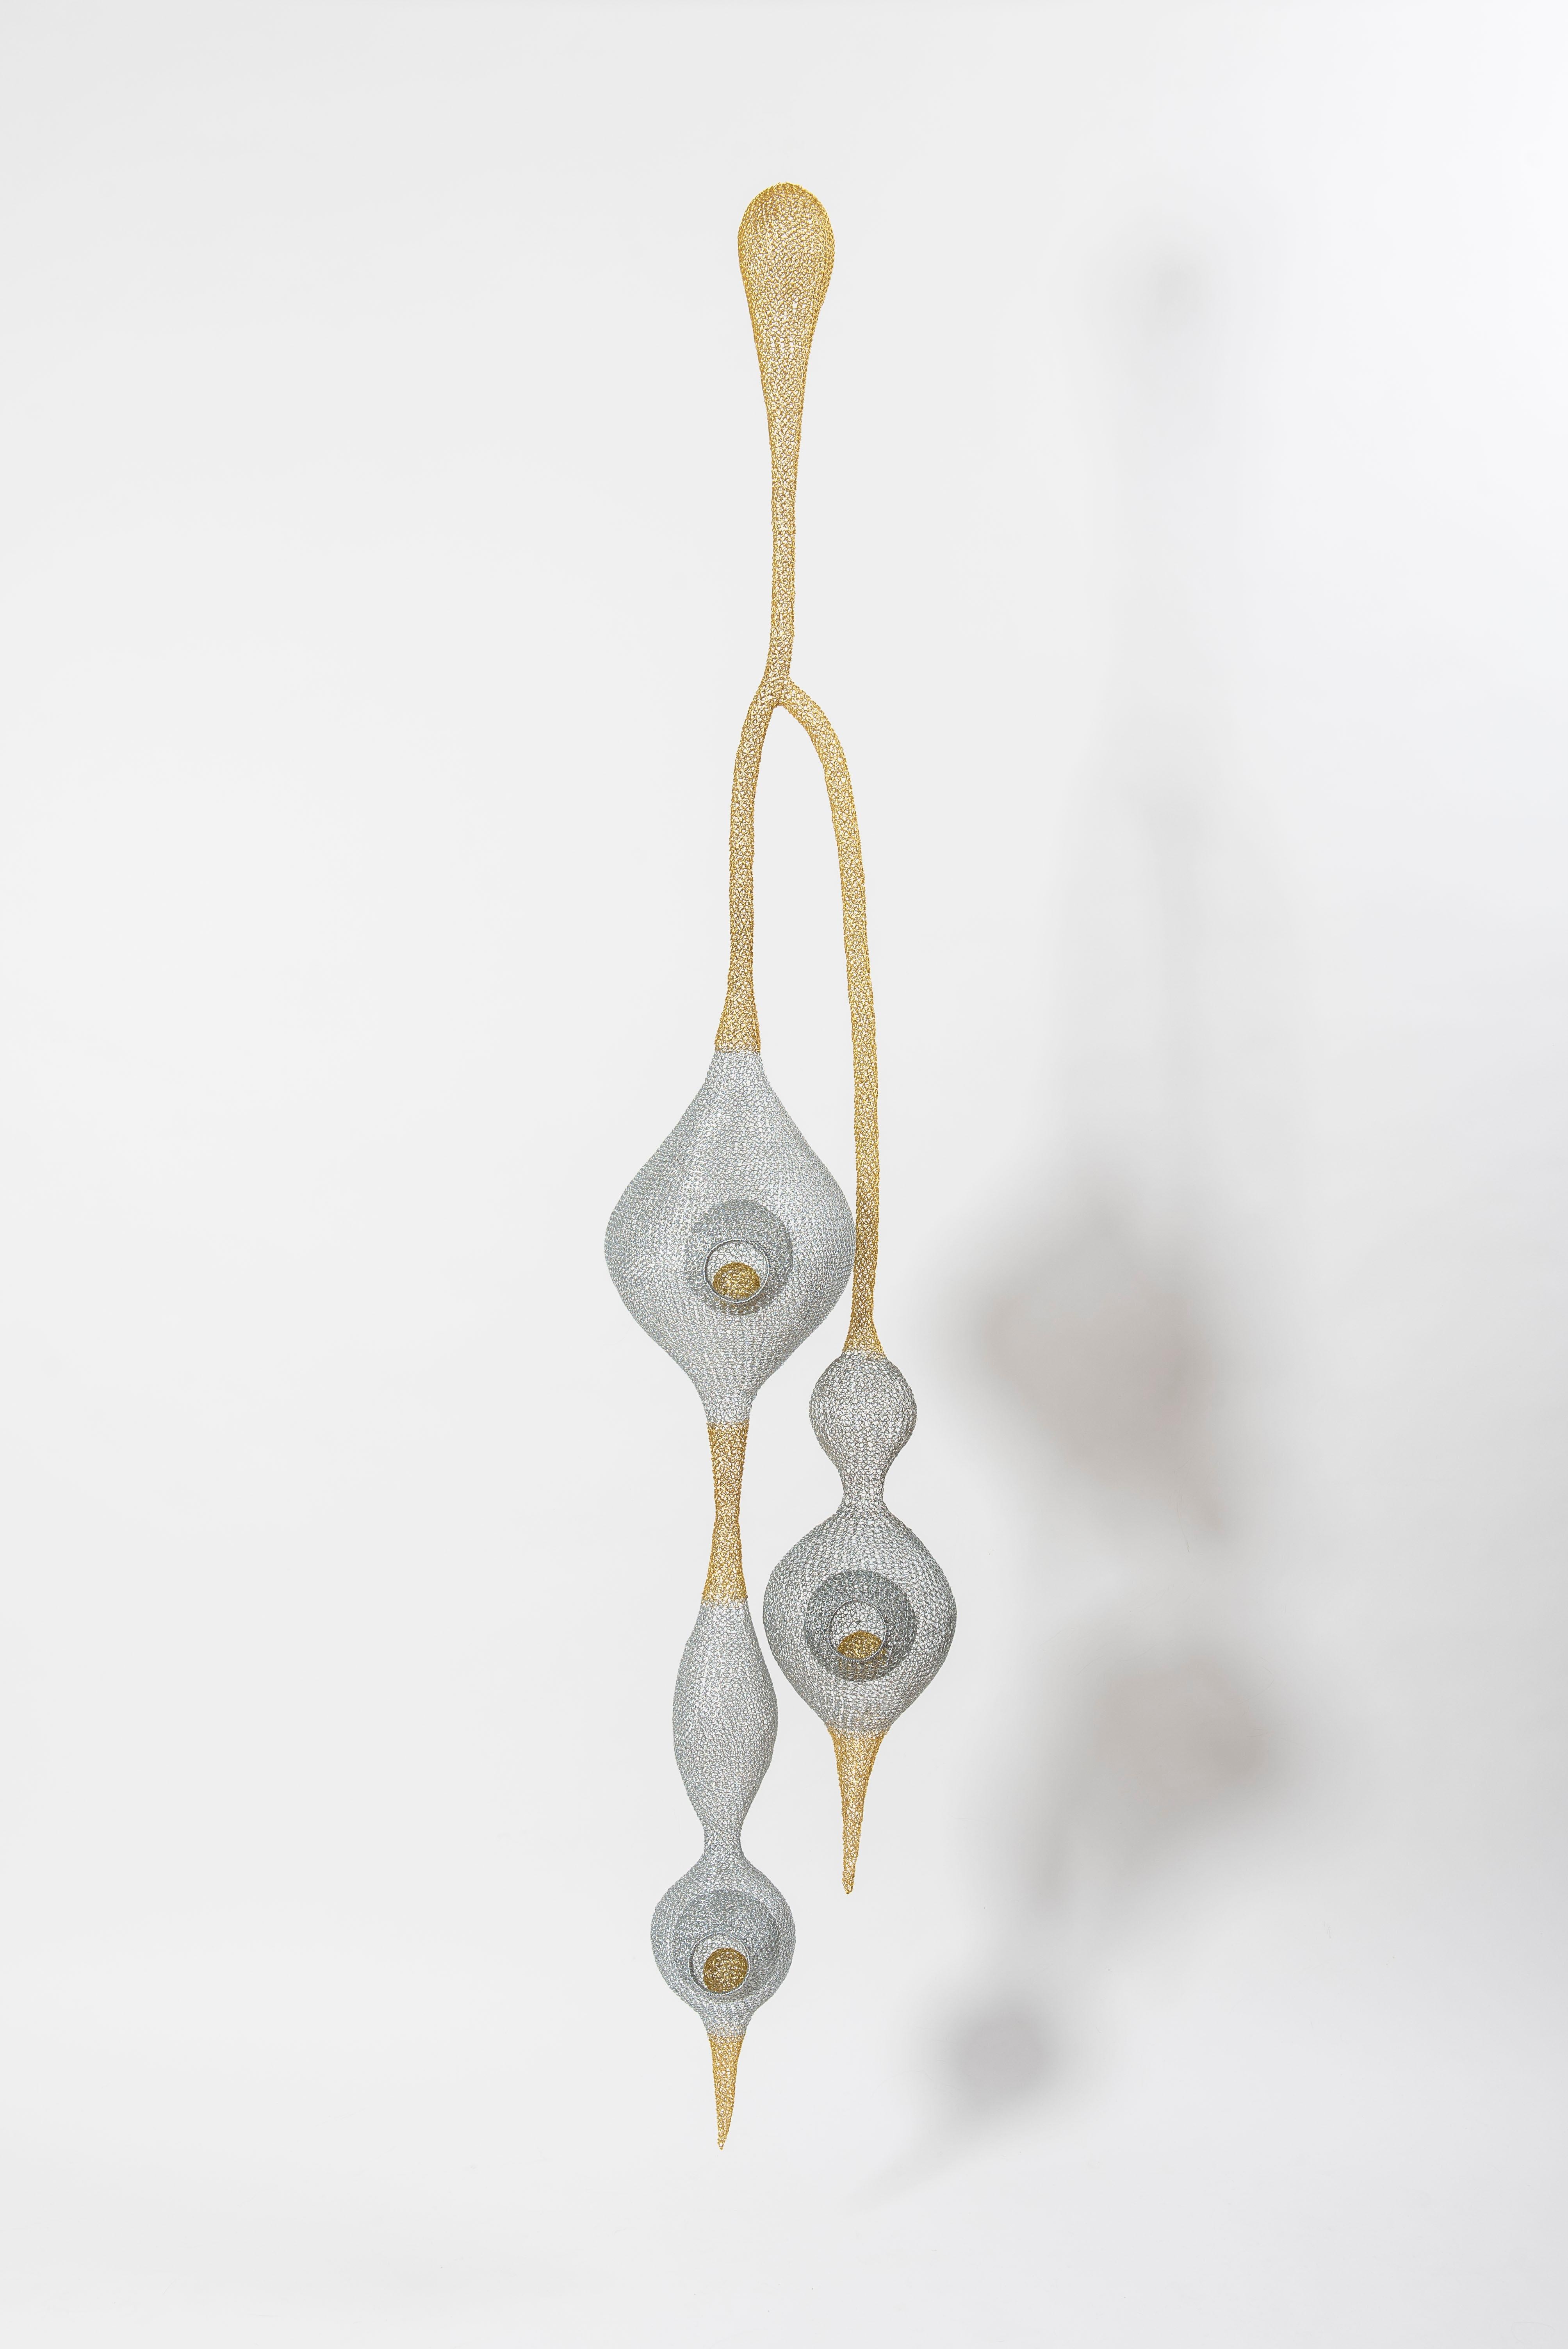 Delphine Grandvaux Abstract Sculpture - "Obéole", Hand-Knitted Airy Transparent Pendant Golden Grey Metallic Sculpture